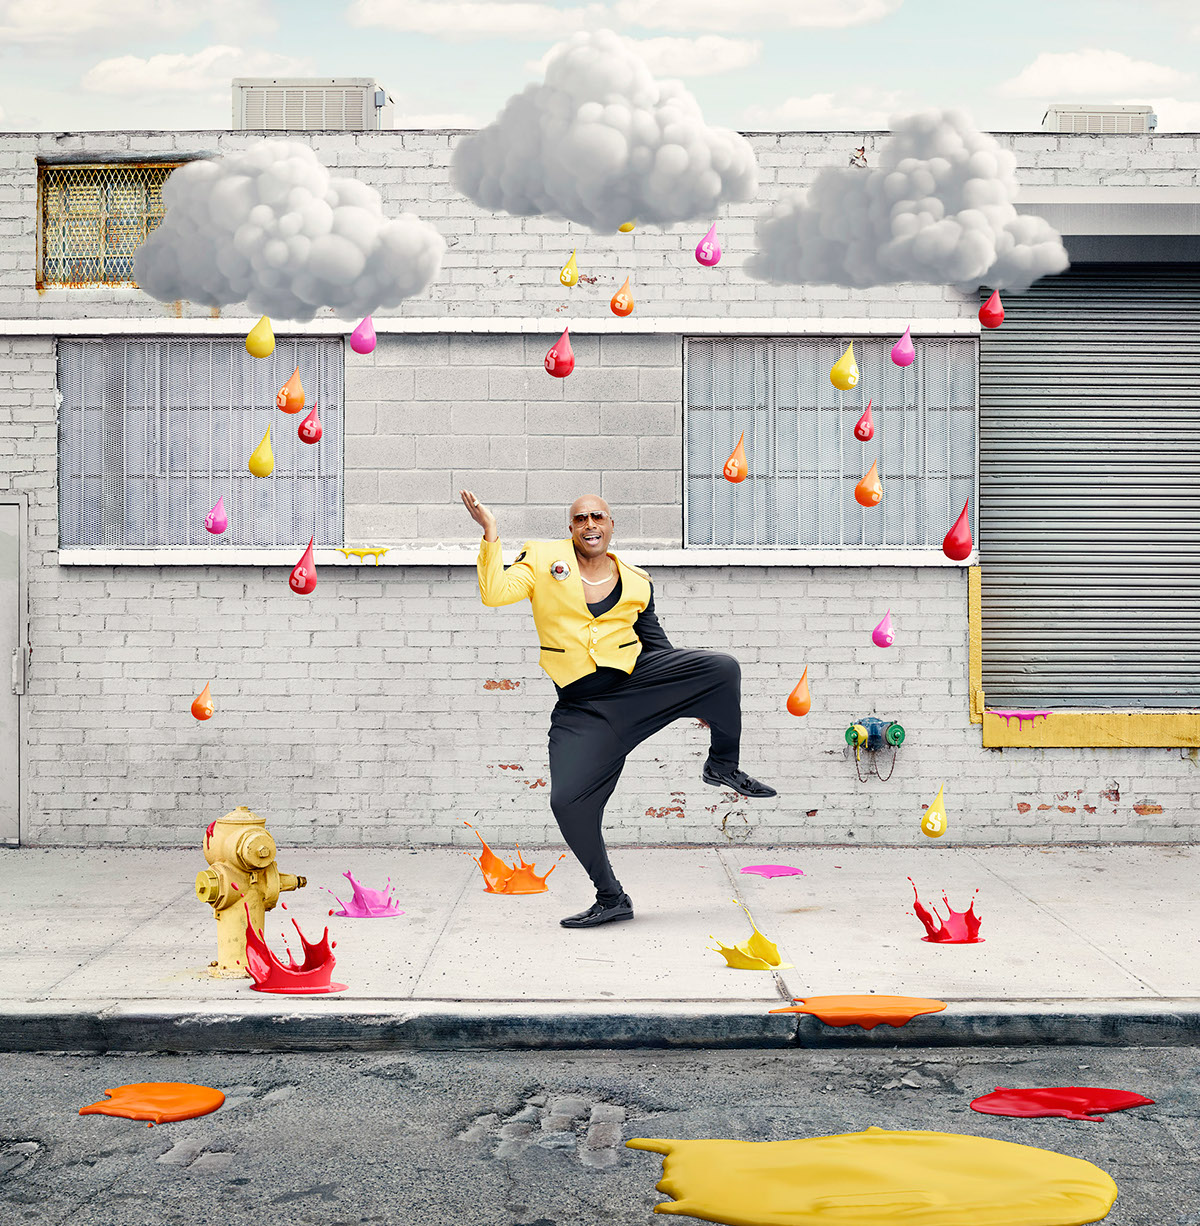 Candy color mc hammer starburst wrigleys Urban conceptual surreal Illustrative CGI